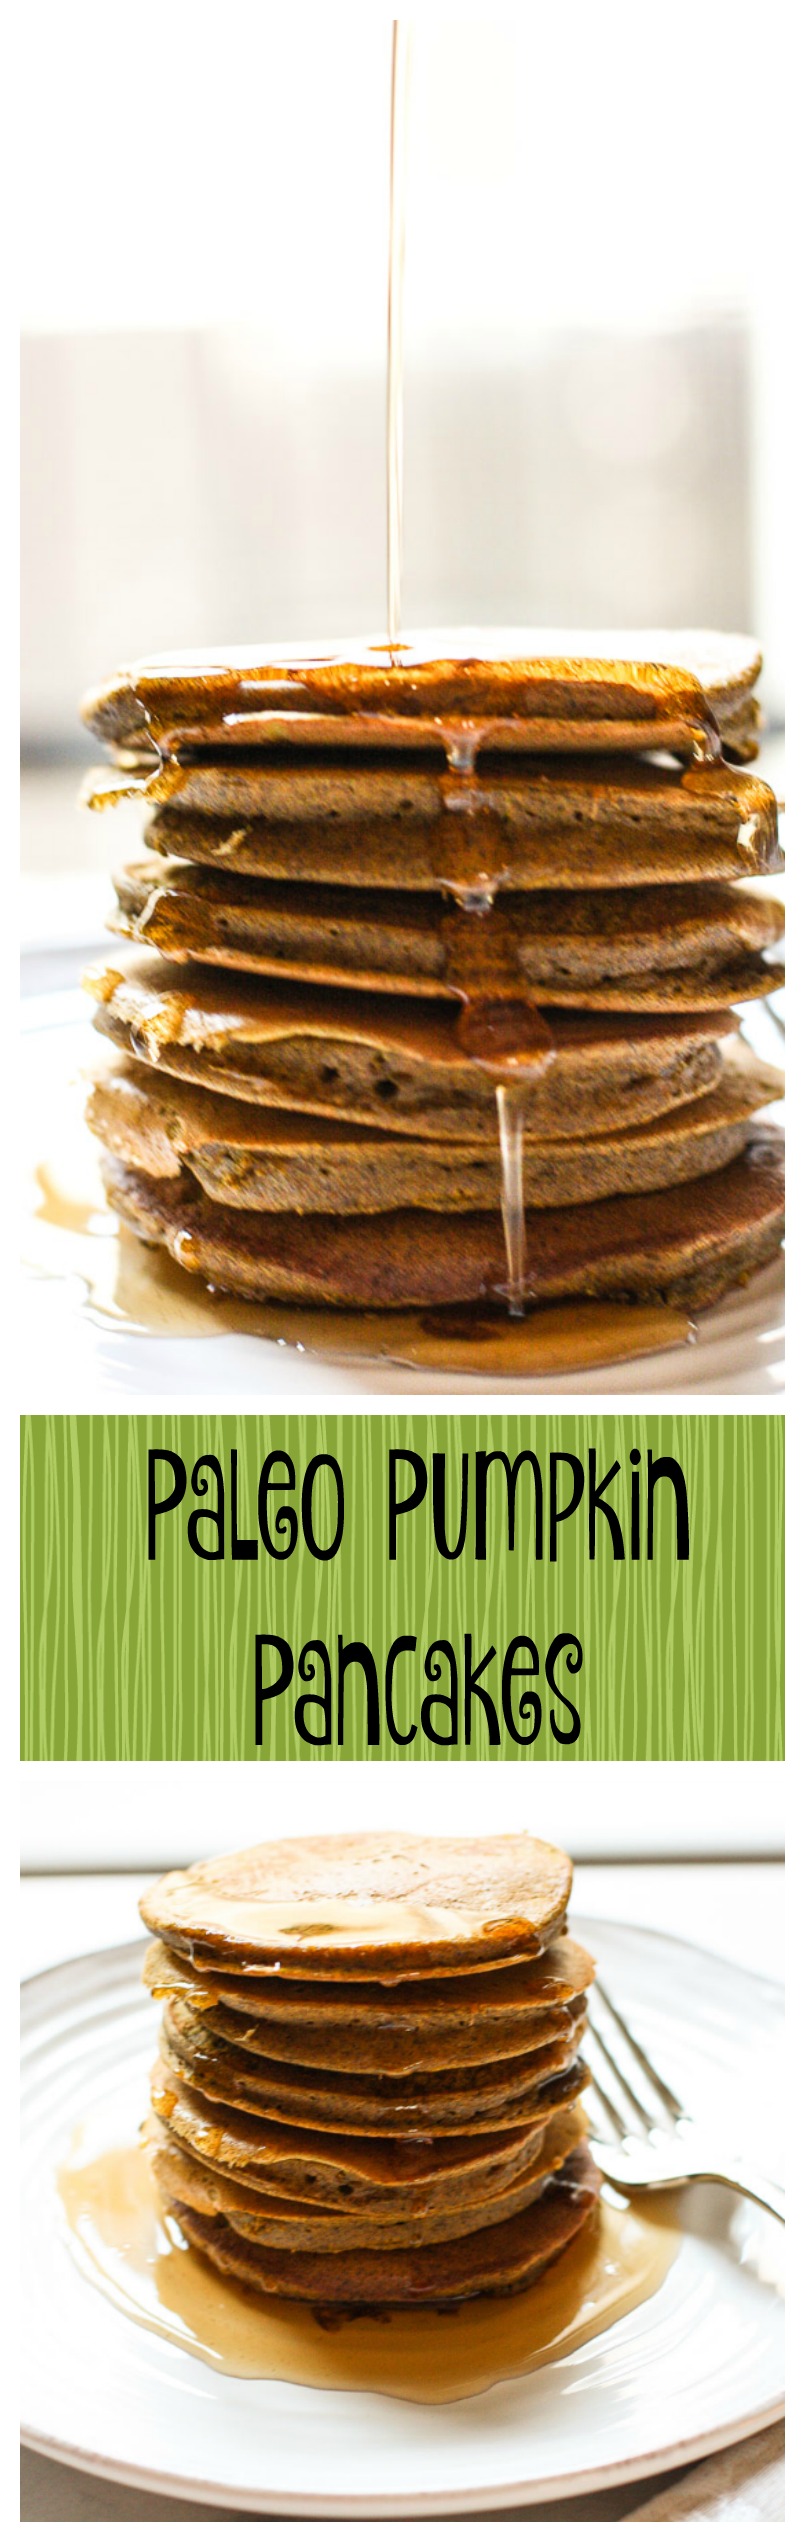 paleo pumpkin pancakes